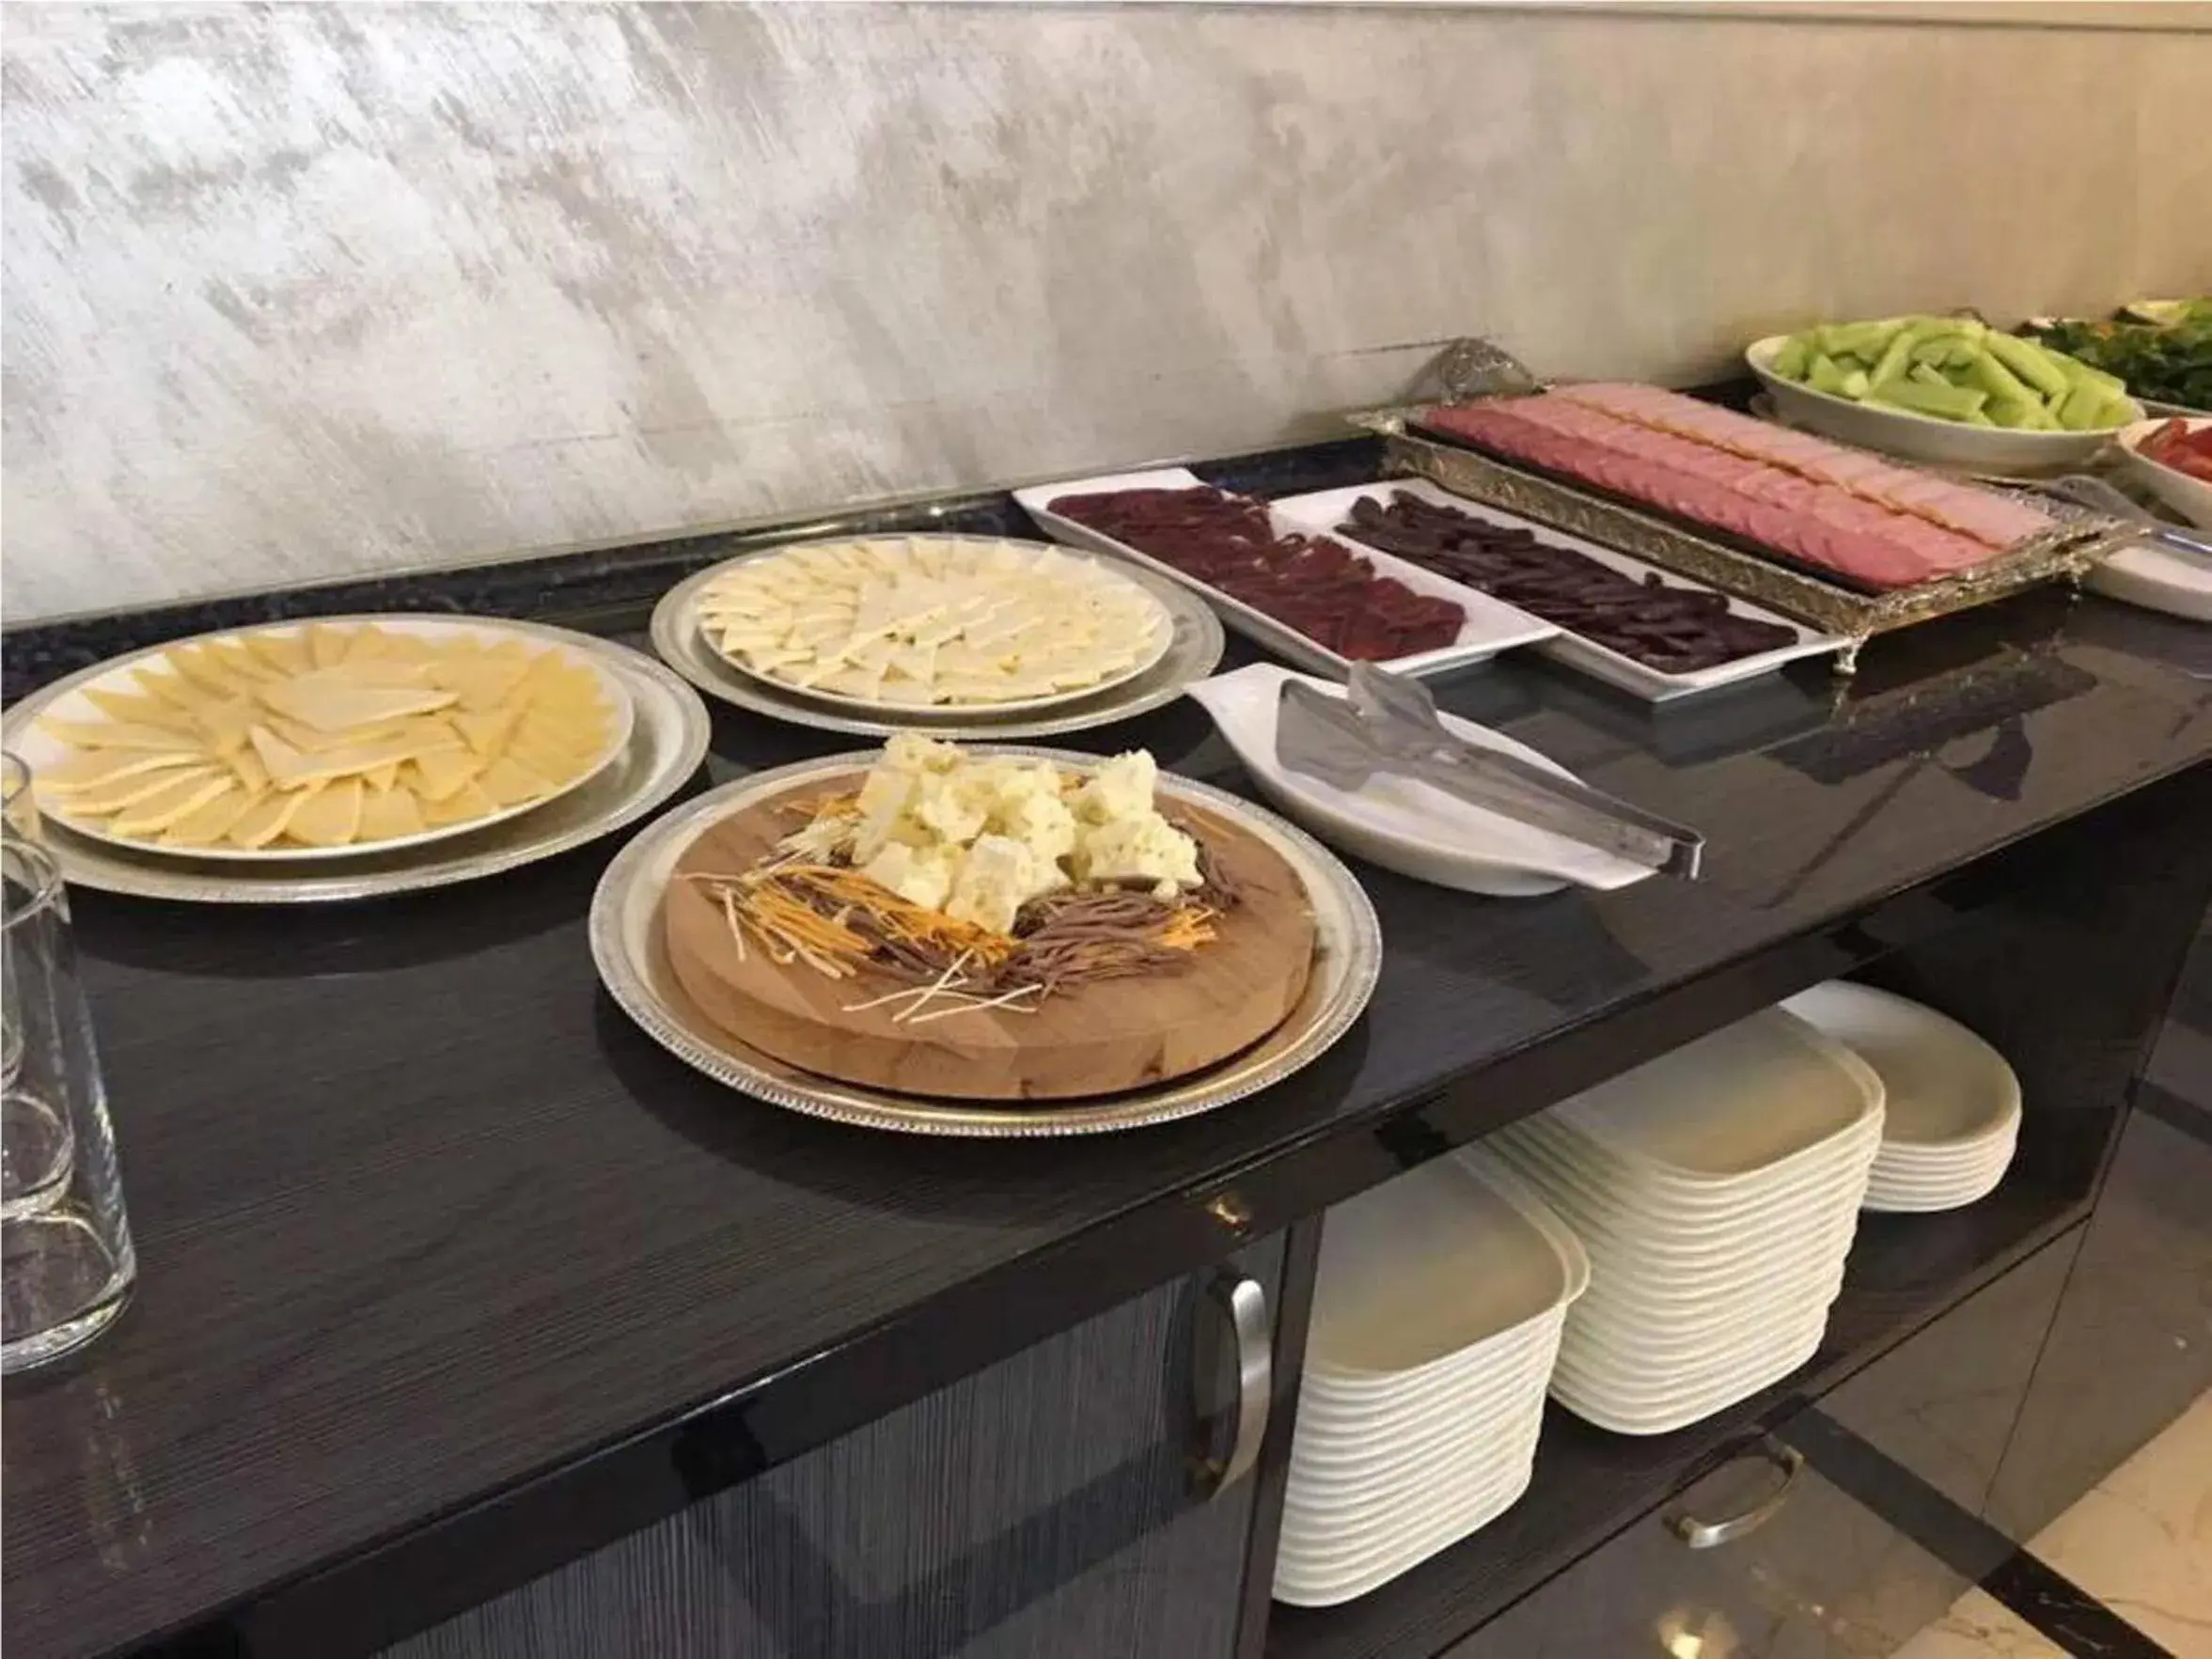 Buffet breakfast in Imperial Palace Hotel